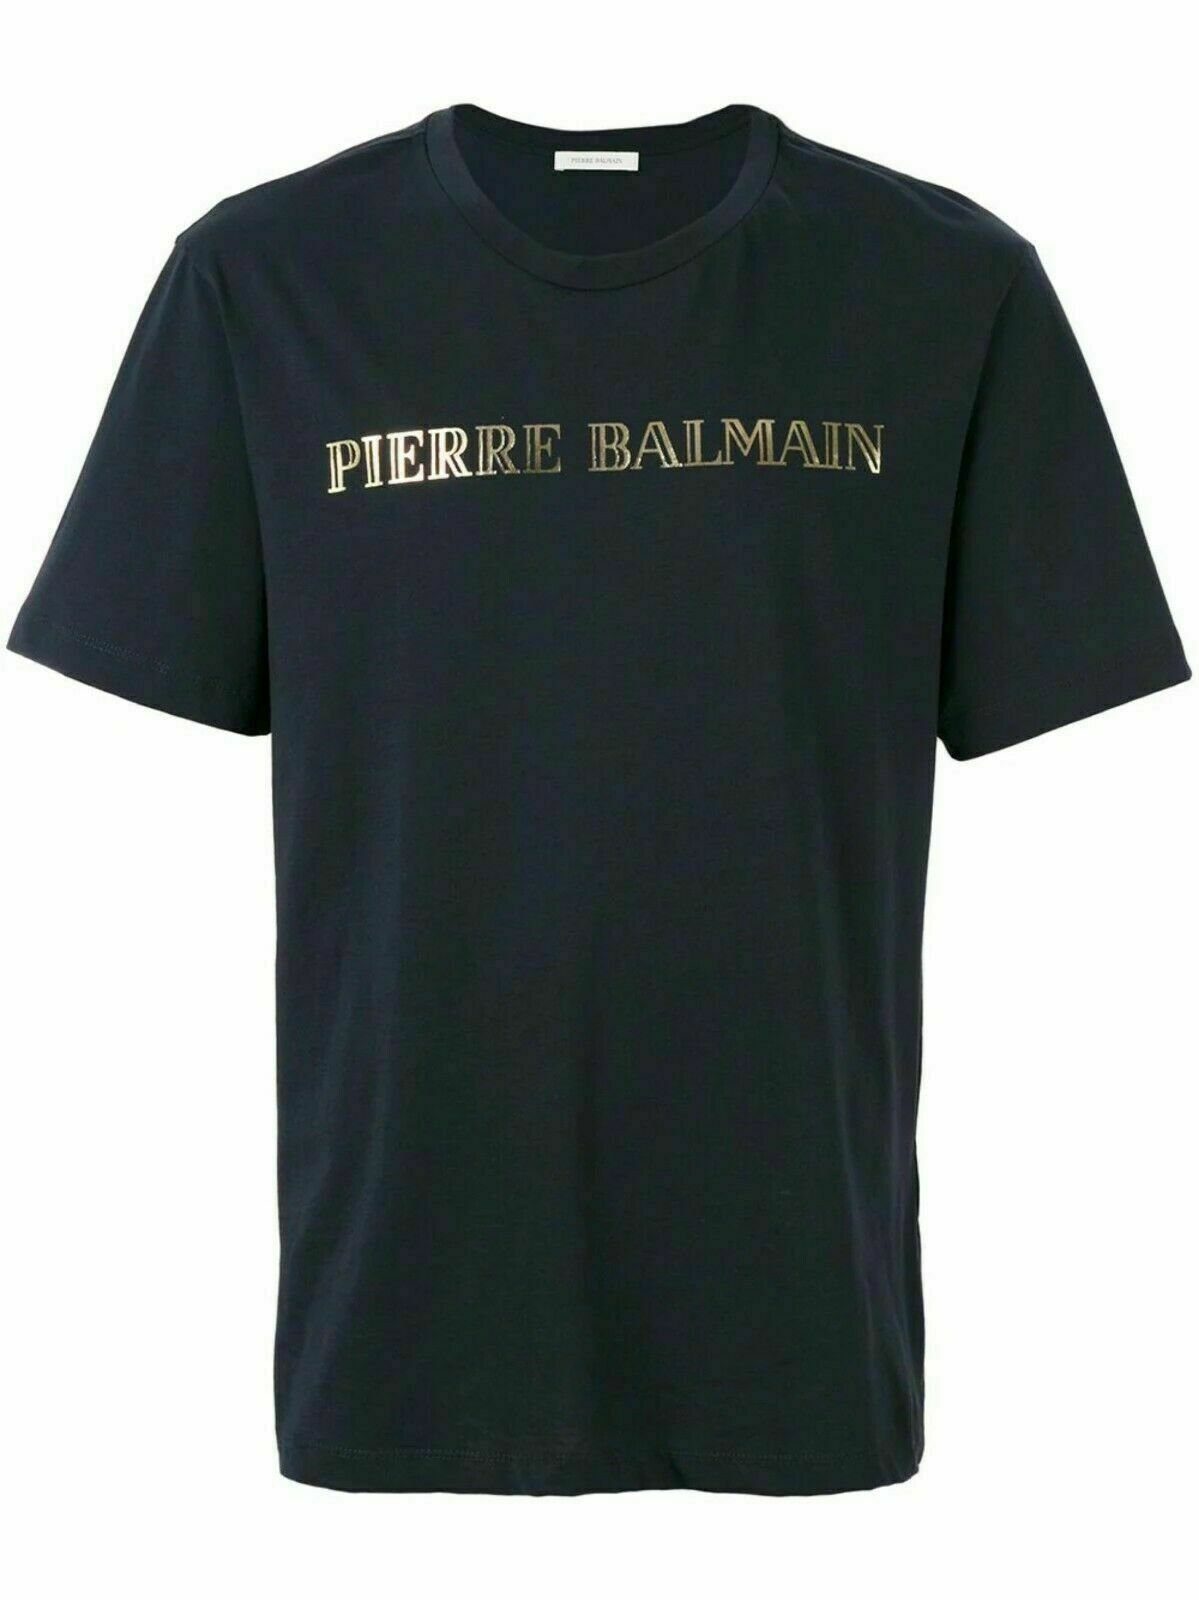 Balmain Print-Shirt PIERRE BALMAIN MENS ICONIC TOP LOGOSHIRT GOLD BLAU